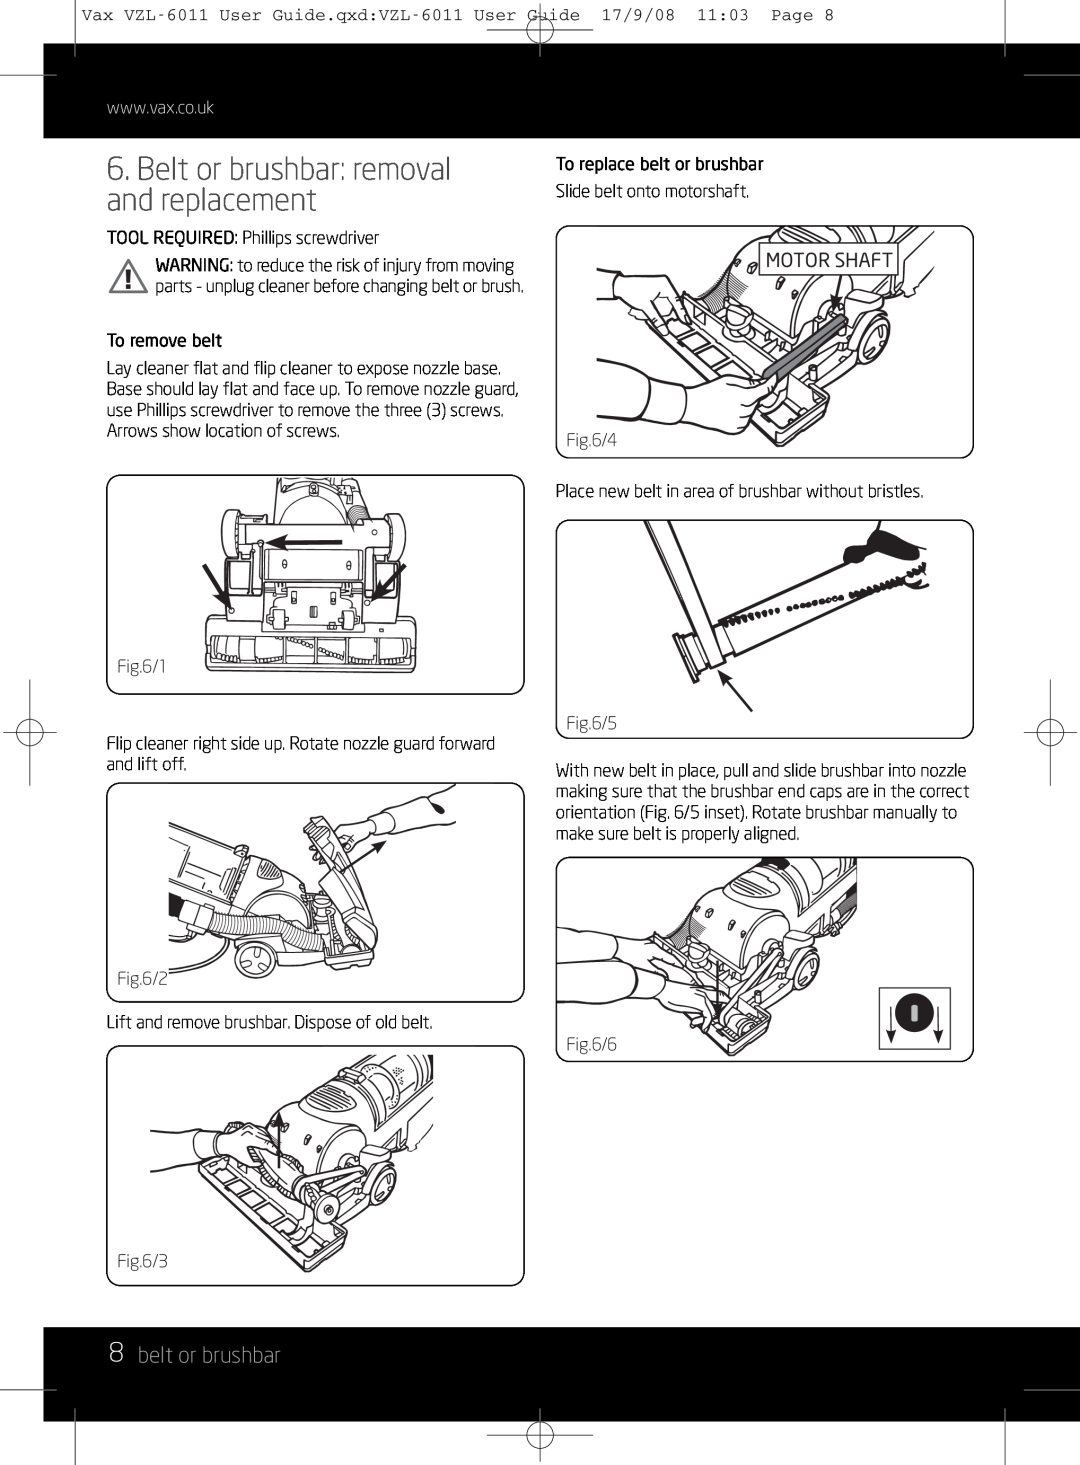 Vizio VZL-6011 instruction manual Belt or brushbar removal and replacement, 8belt or brushbar, Motor Shaft 